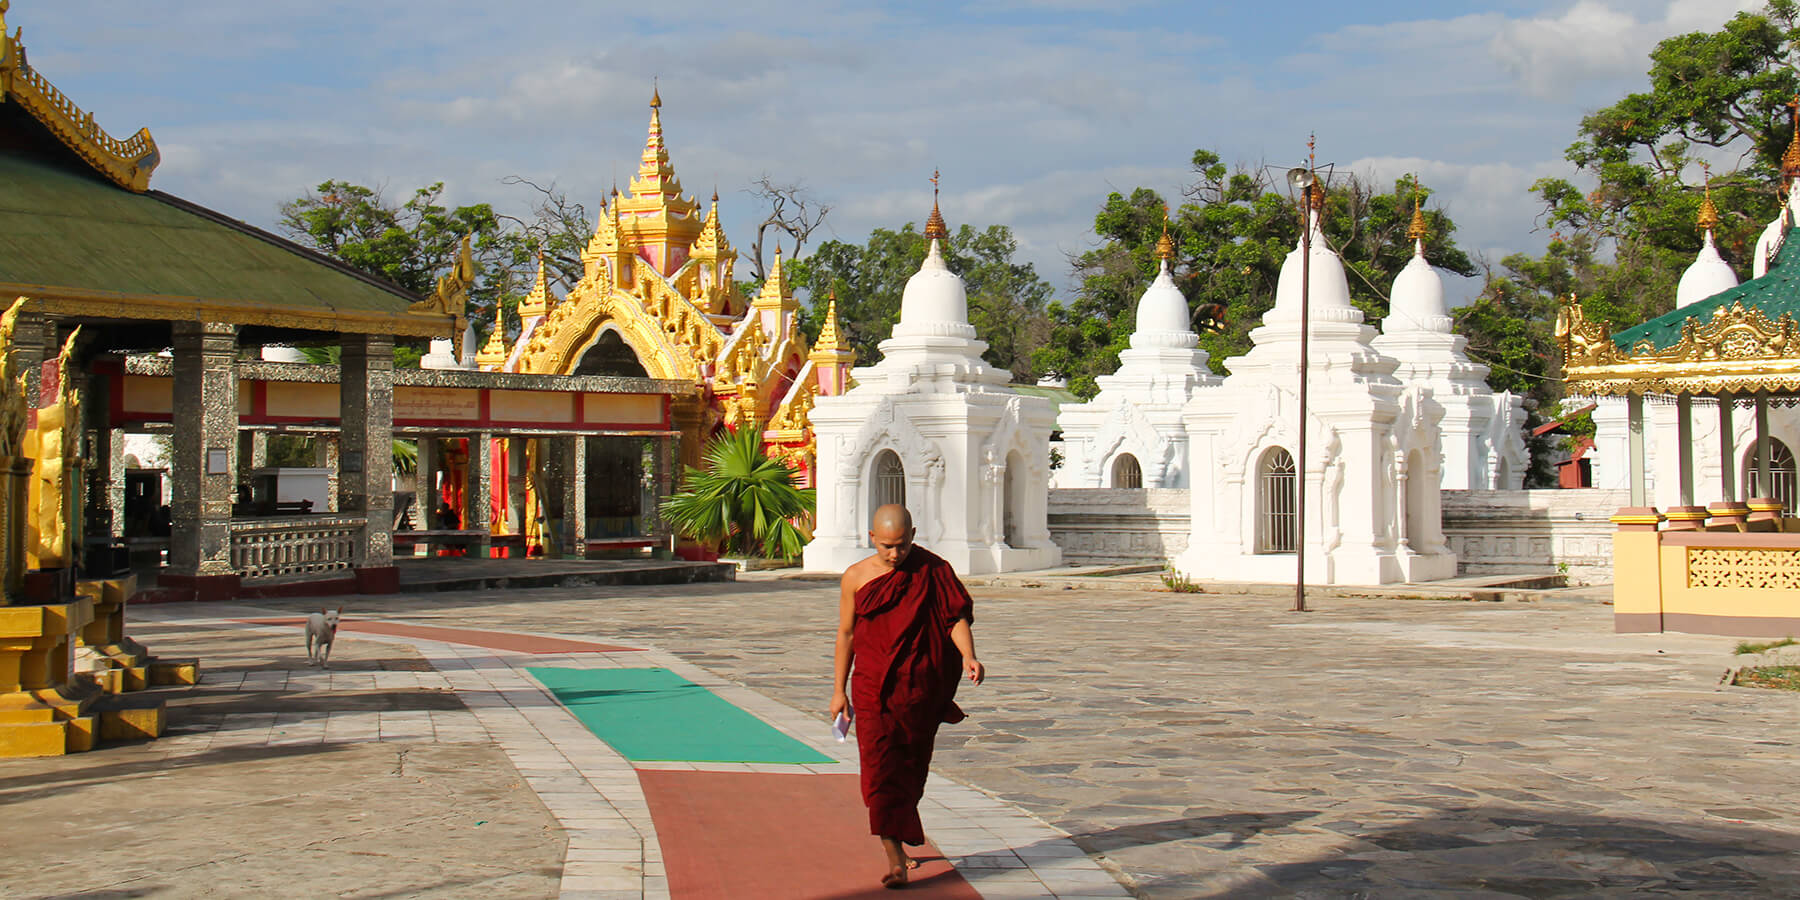 Burma trips and tours